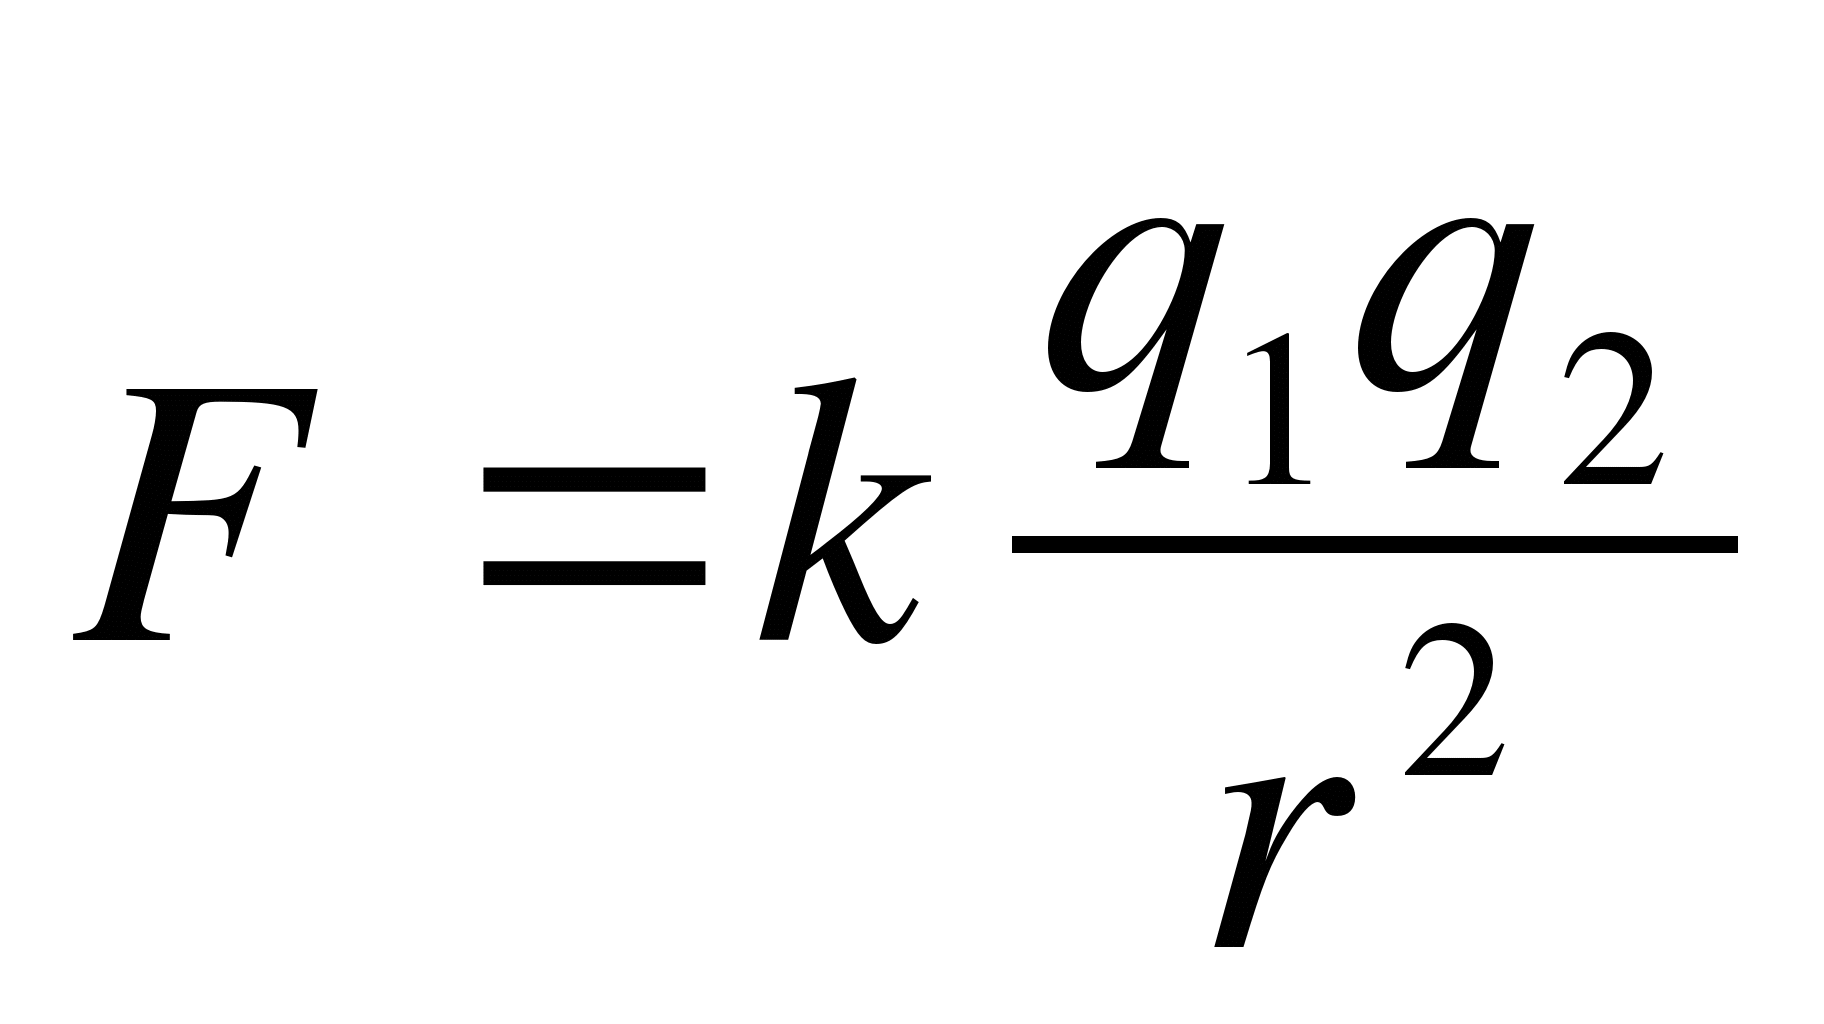 F kq1q2 r2. Закон кулона формула. Закон кулона формула и формулировка. Формула кулона физика. Закон кулона физика формула.